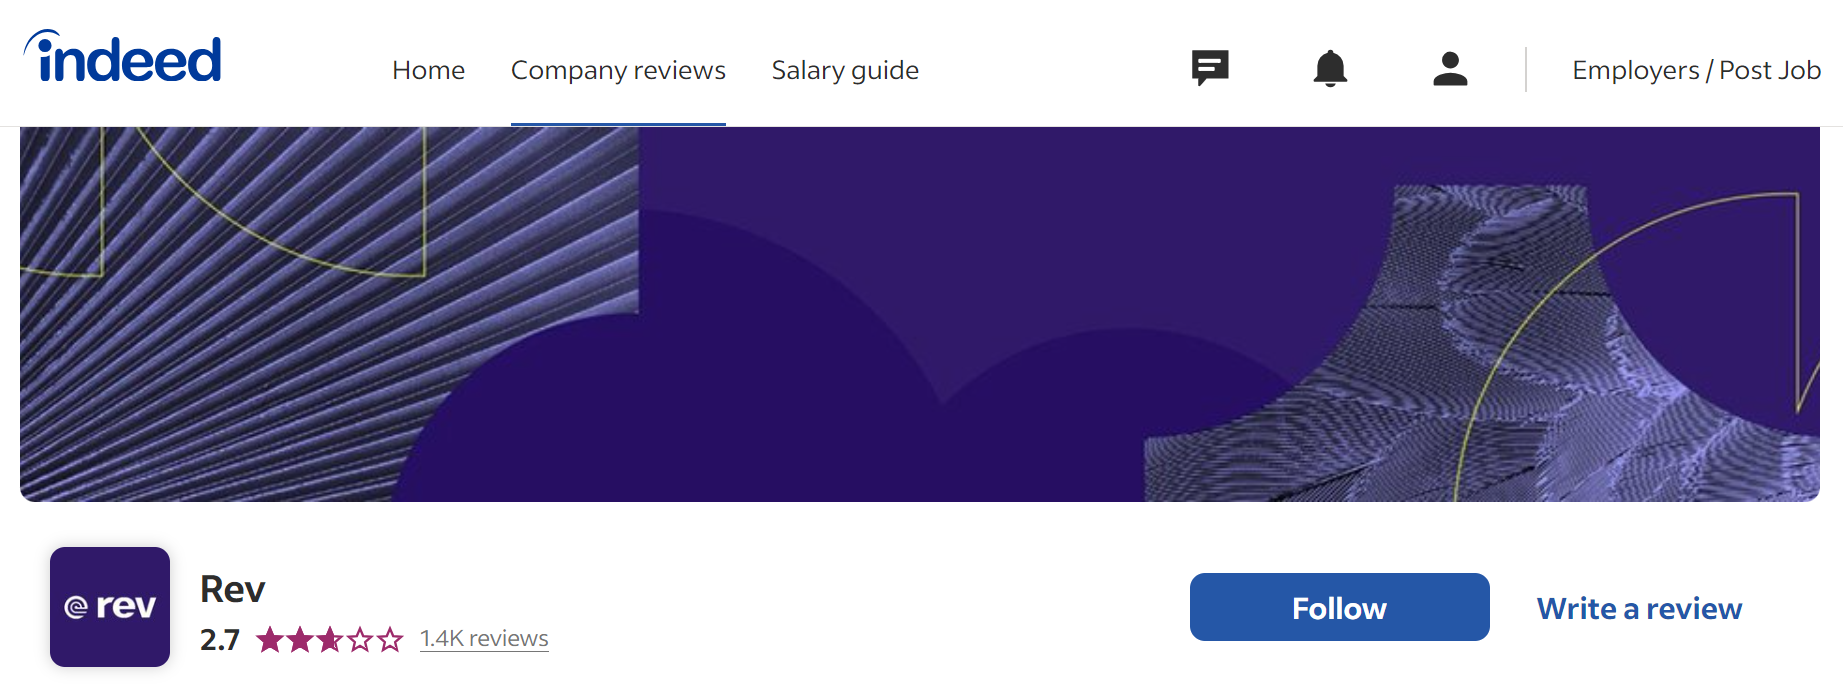 rev.com reviews on indeed screenshot